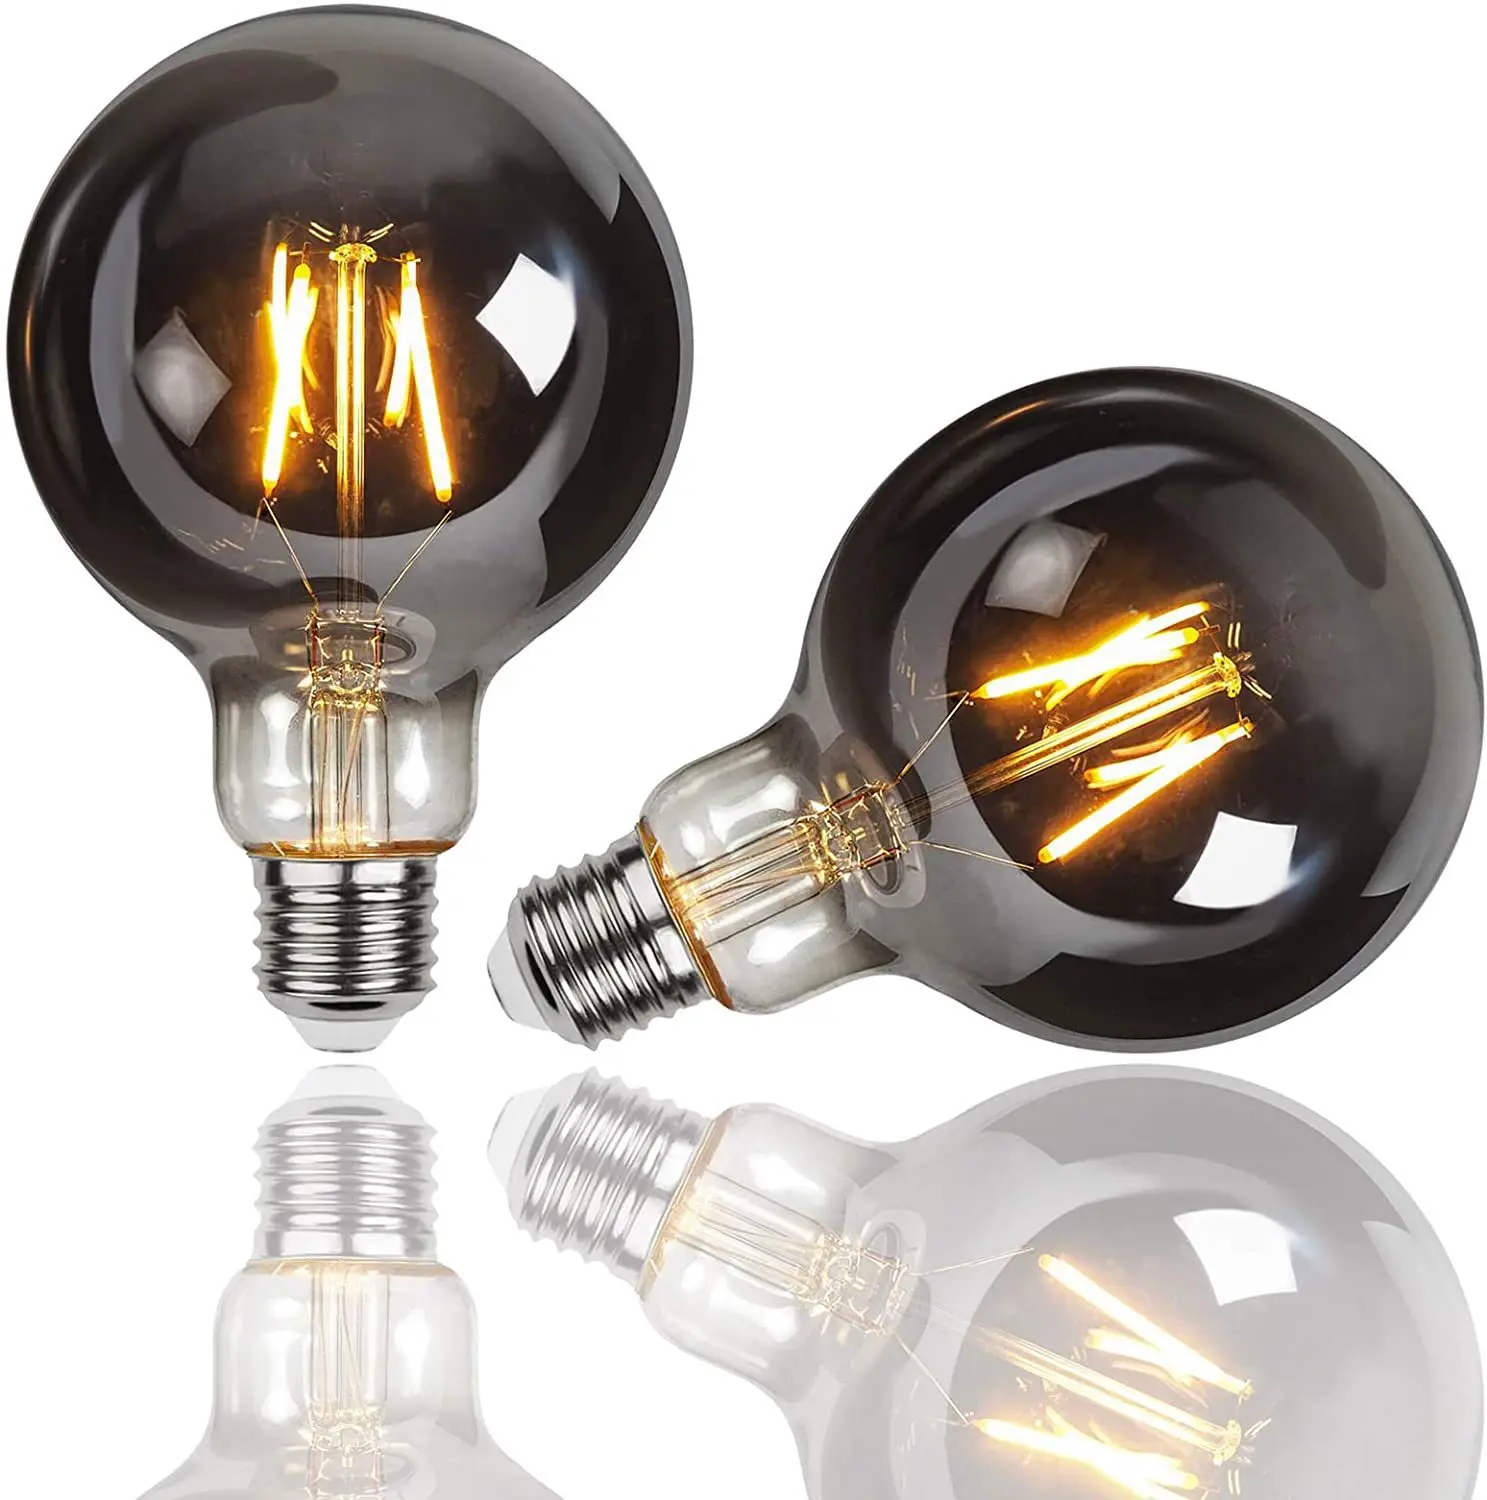 E27 E14 Retro Edison Filament Bulb Lamp 220v-240v Light Bulb C35 G45 A60 St64 G80 G95 G125 Glass Bulb Vintage Light - Buy Indoor Edison Filament G45 G14 2w Two